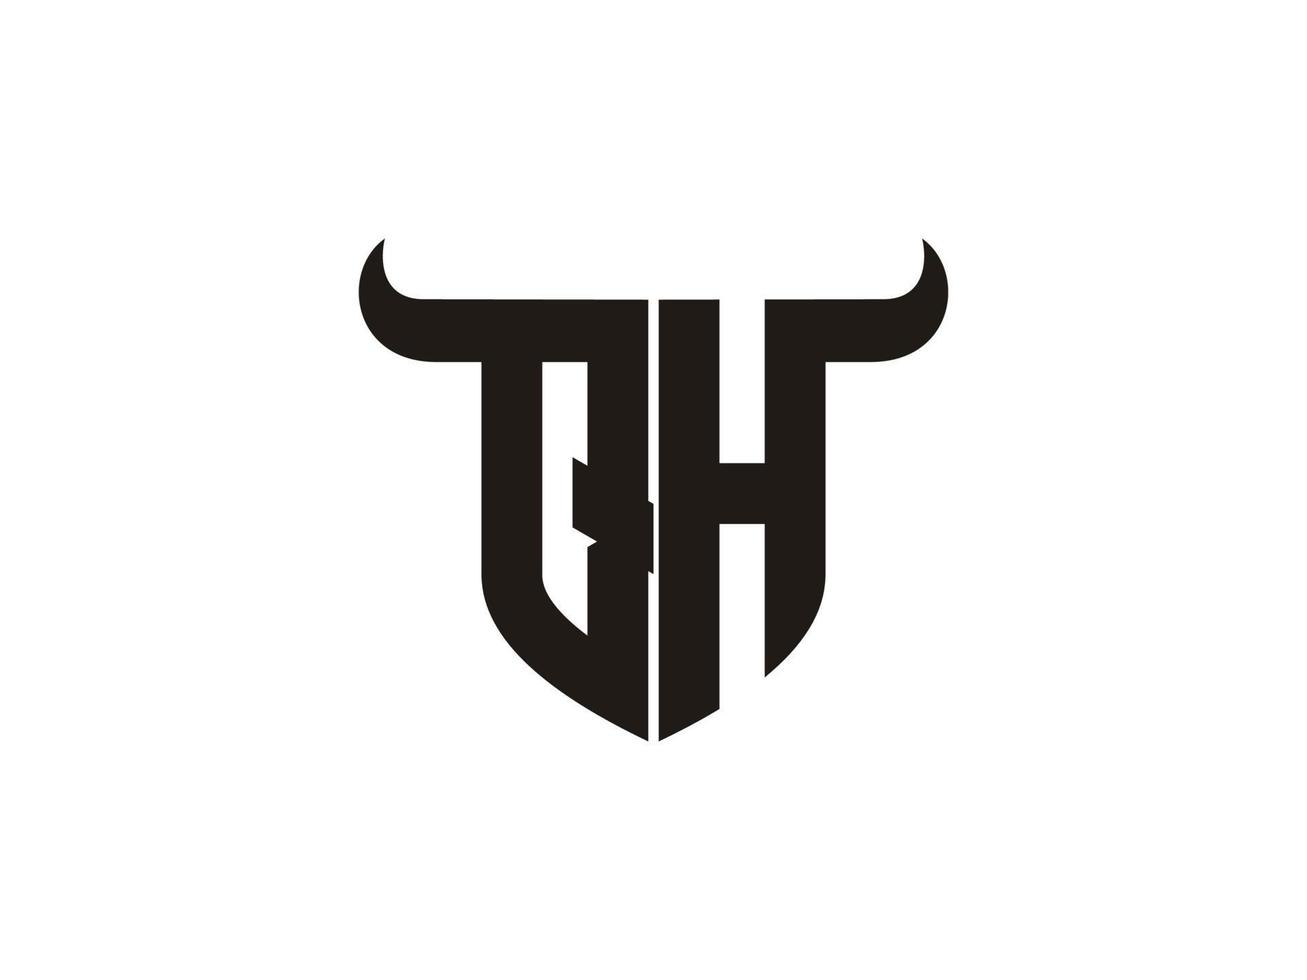 diseño inicial del logo del toro qh. vector